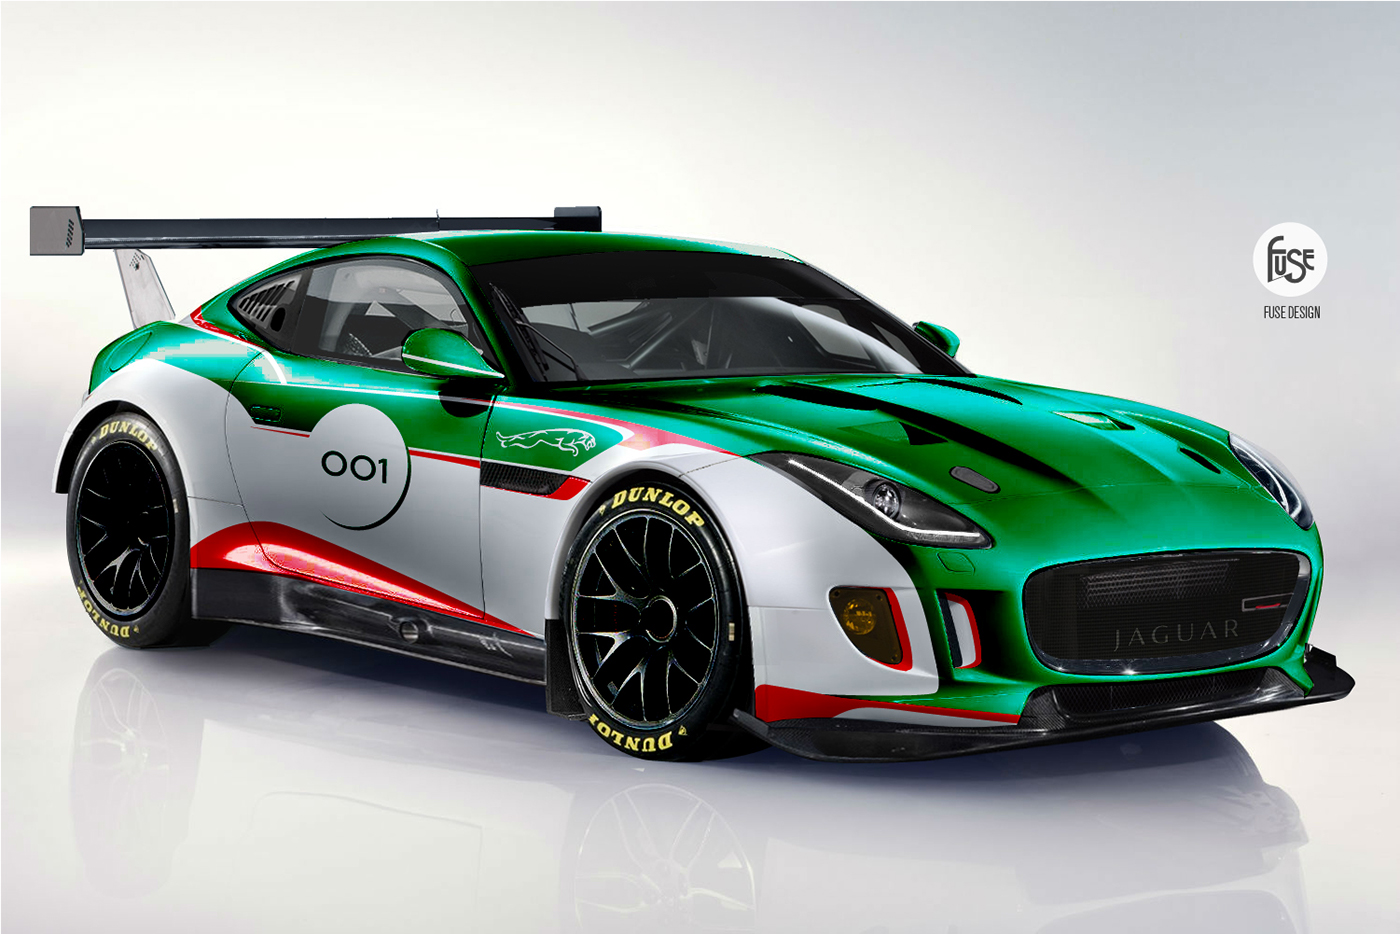 Jaguar F-Type GT3 imagined on Behance